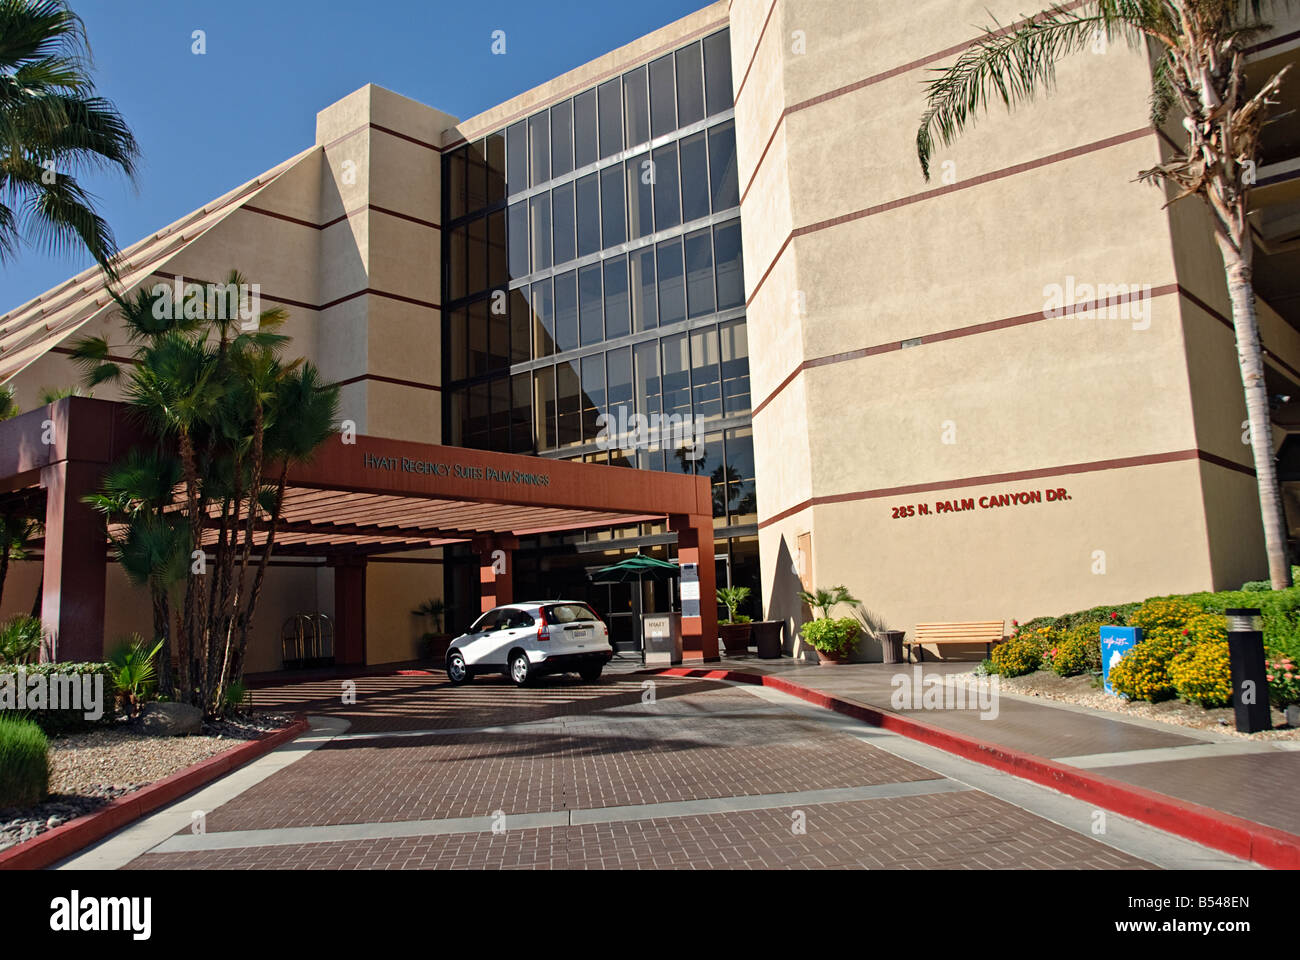 Hyatt Regency Suites Palm Springs CA California usa Exterior Entrance Stock Photo